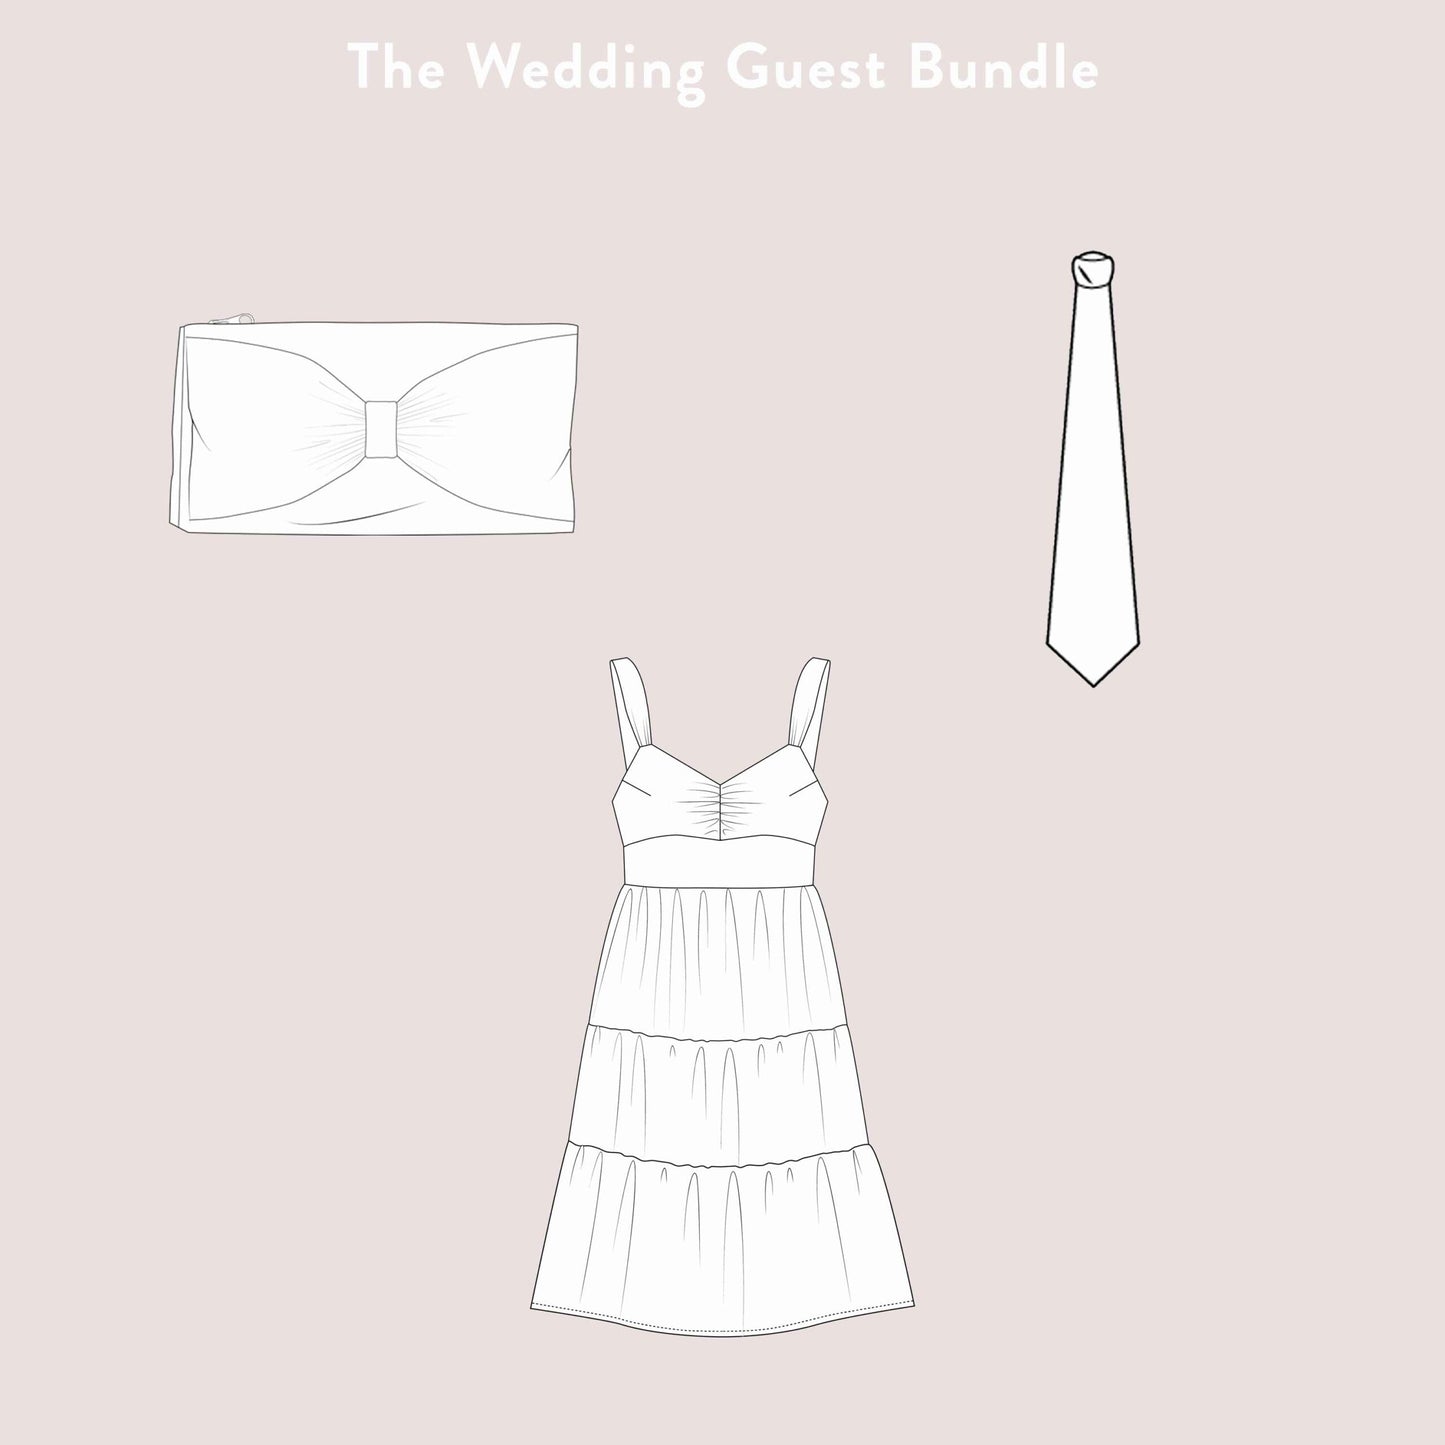 The Wedding Guest Bundle